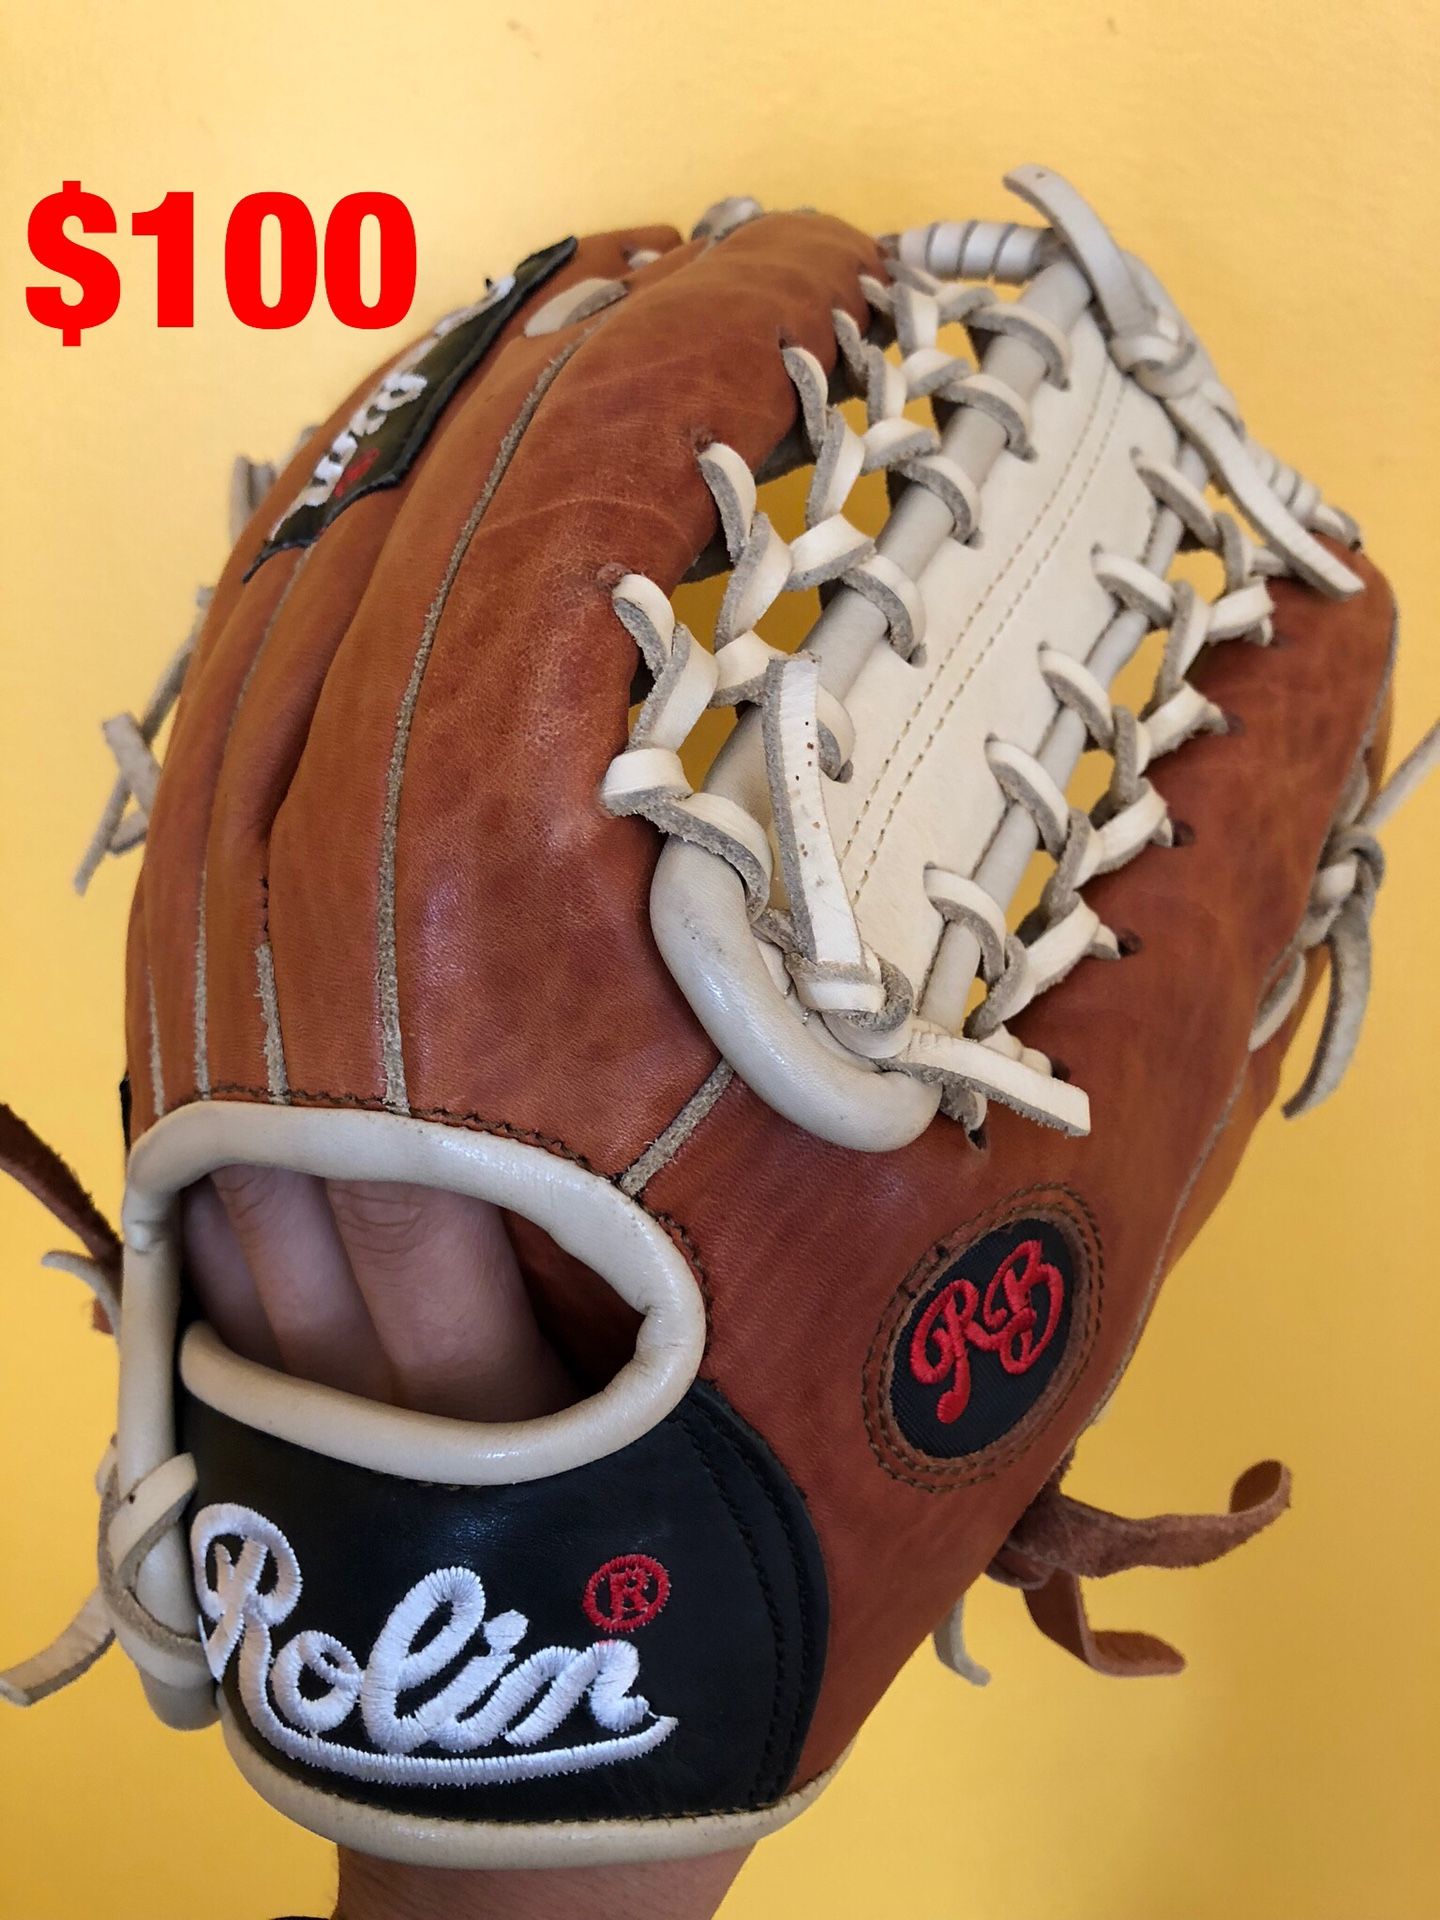 Rolin Pro baseball glove new condition quality leather glove demarini Nike Wilson easton mizuno equipment bats